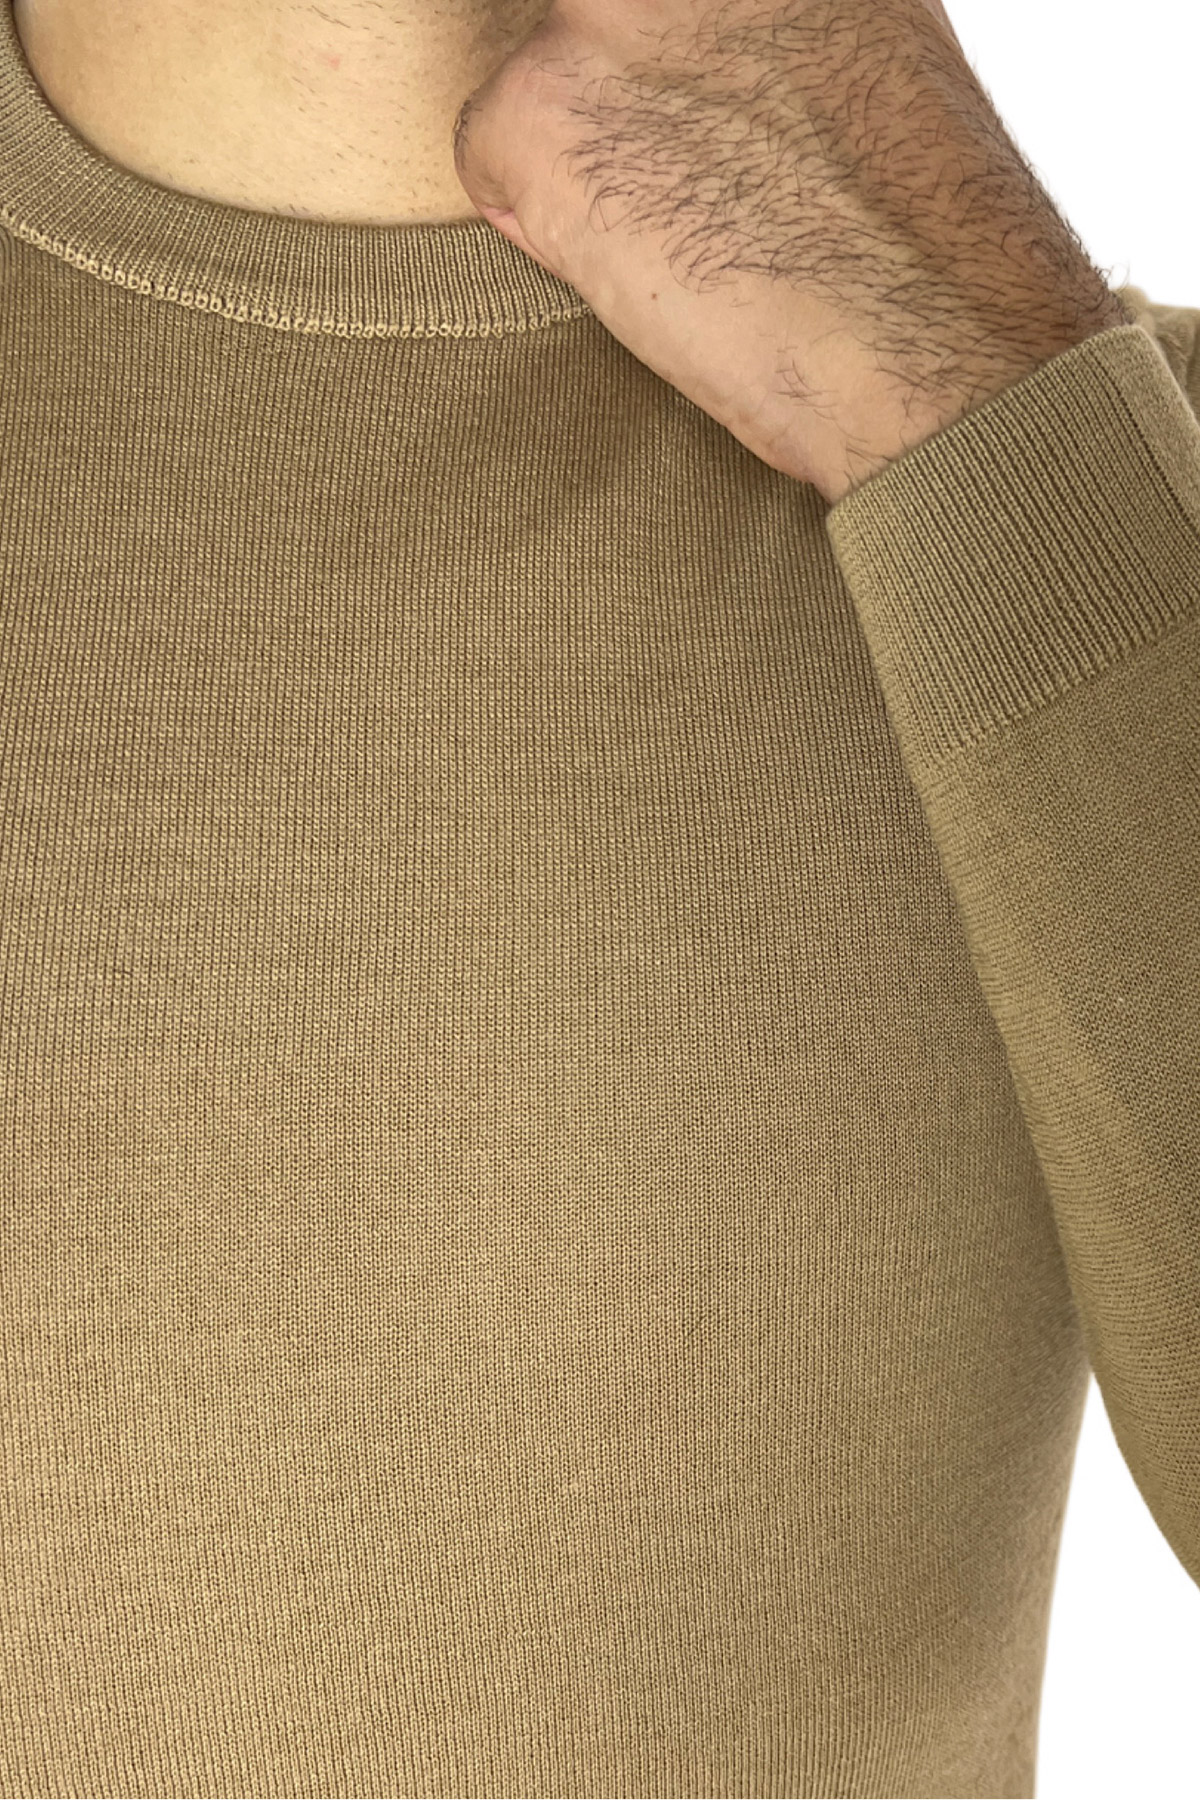 Maglioncino da uomo girocollo beige in lana merinos slim fit made in italy tinta unita